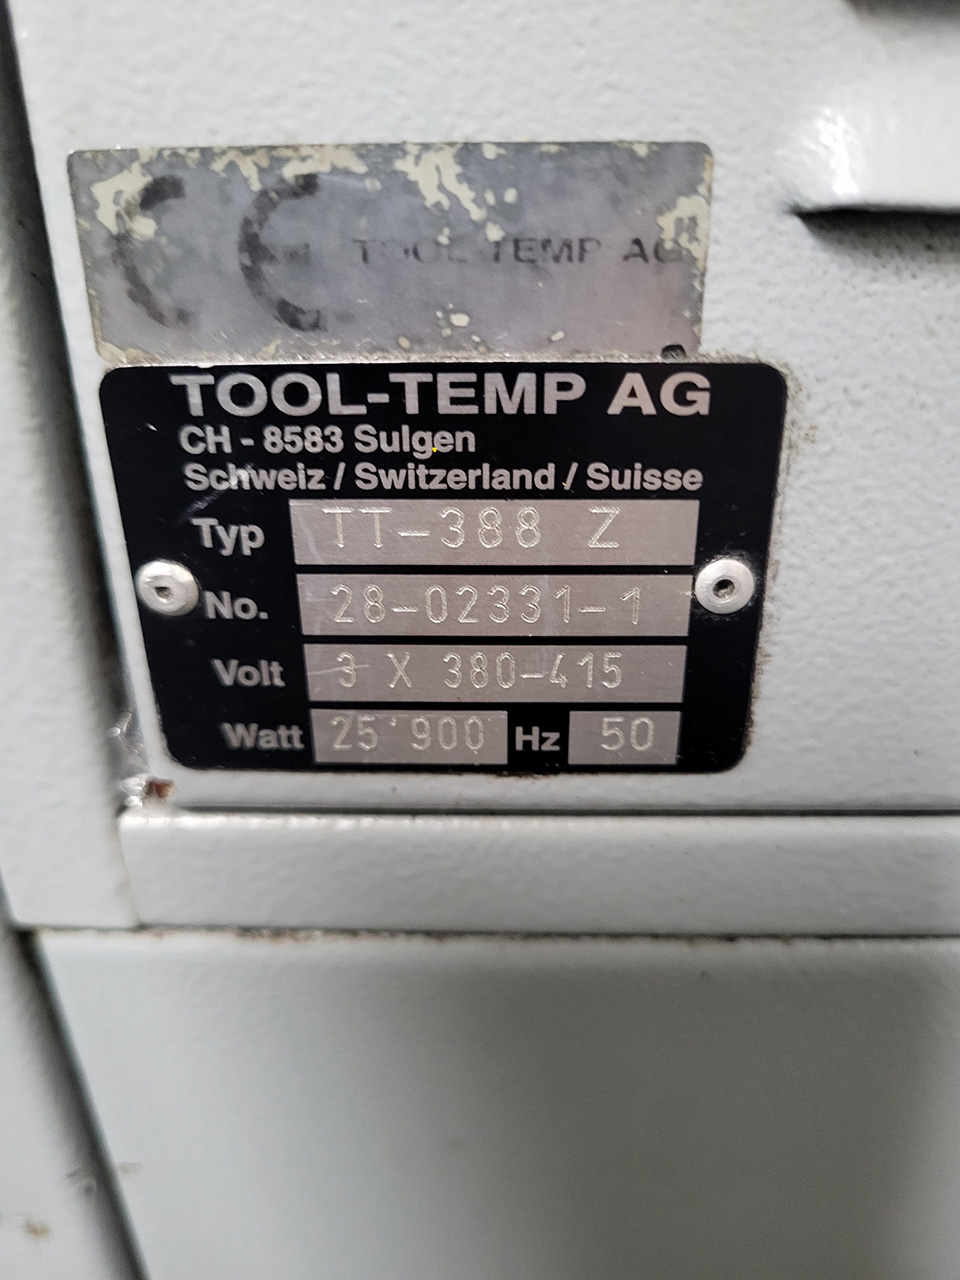 Unidade de controlo de temperatura ToolTemp TT-388 ZU2230, usada